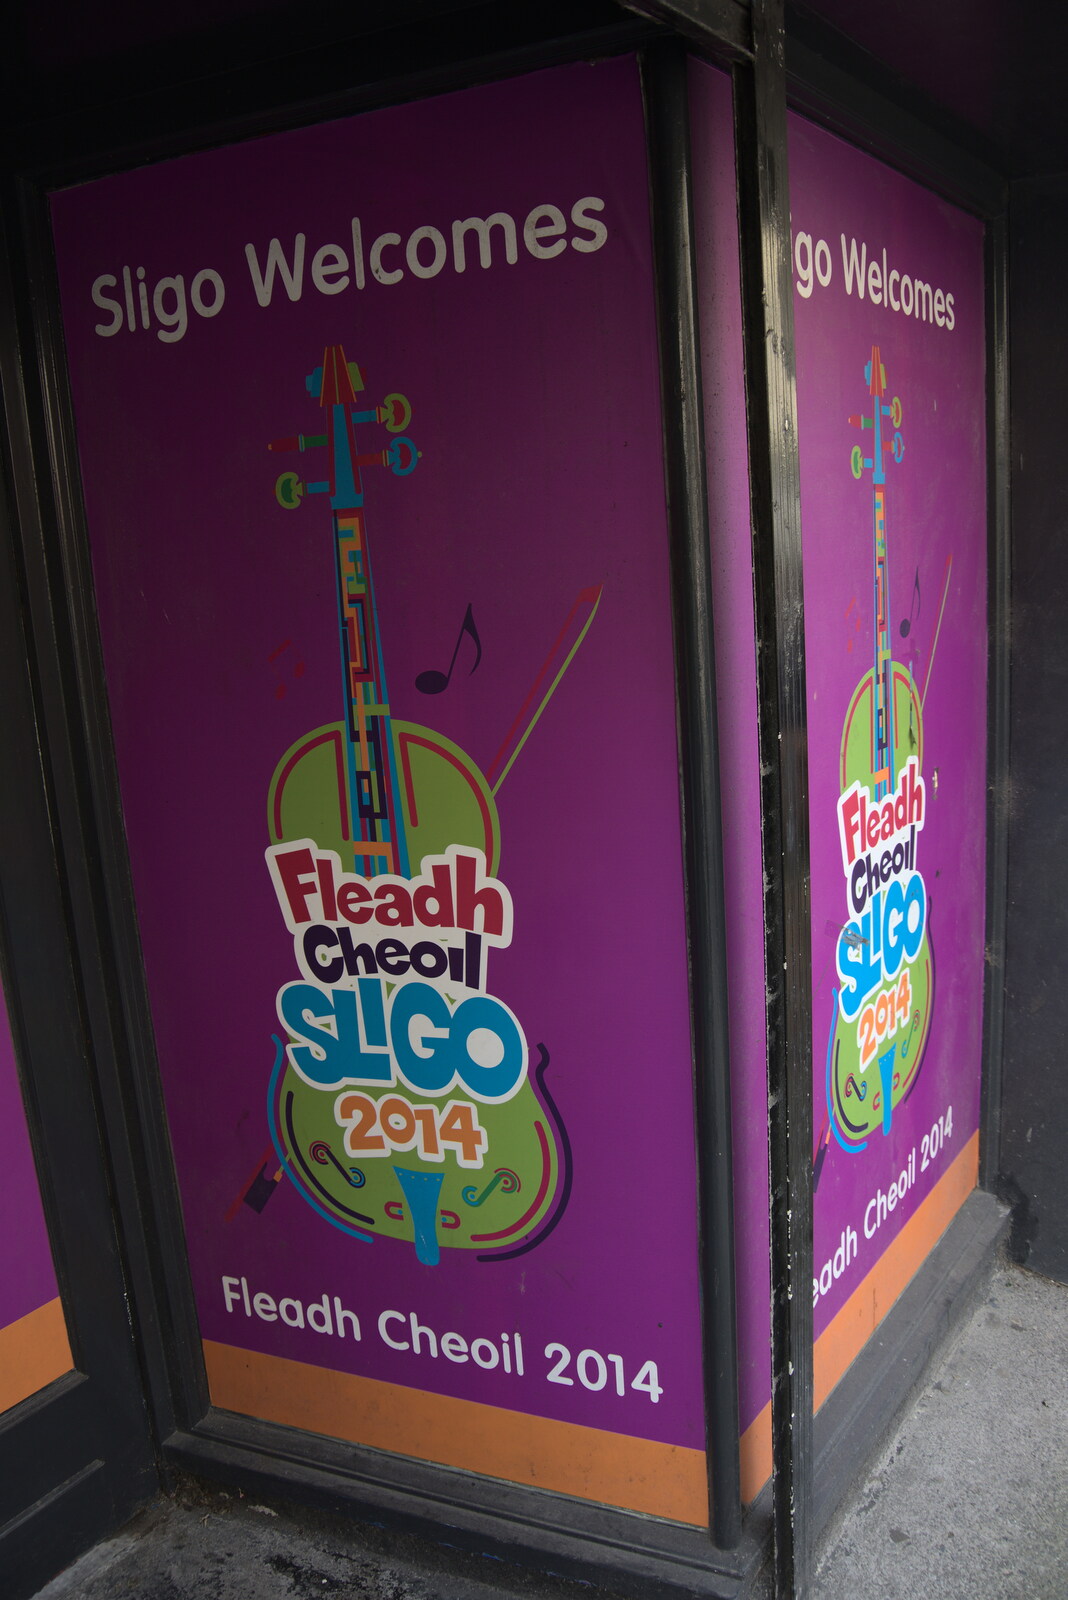 A Trip to Manorhamilton, County Leitrim, Ireland - 11th August 2021: A sign for the Sligo Fleadh Chaoil is a bit late